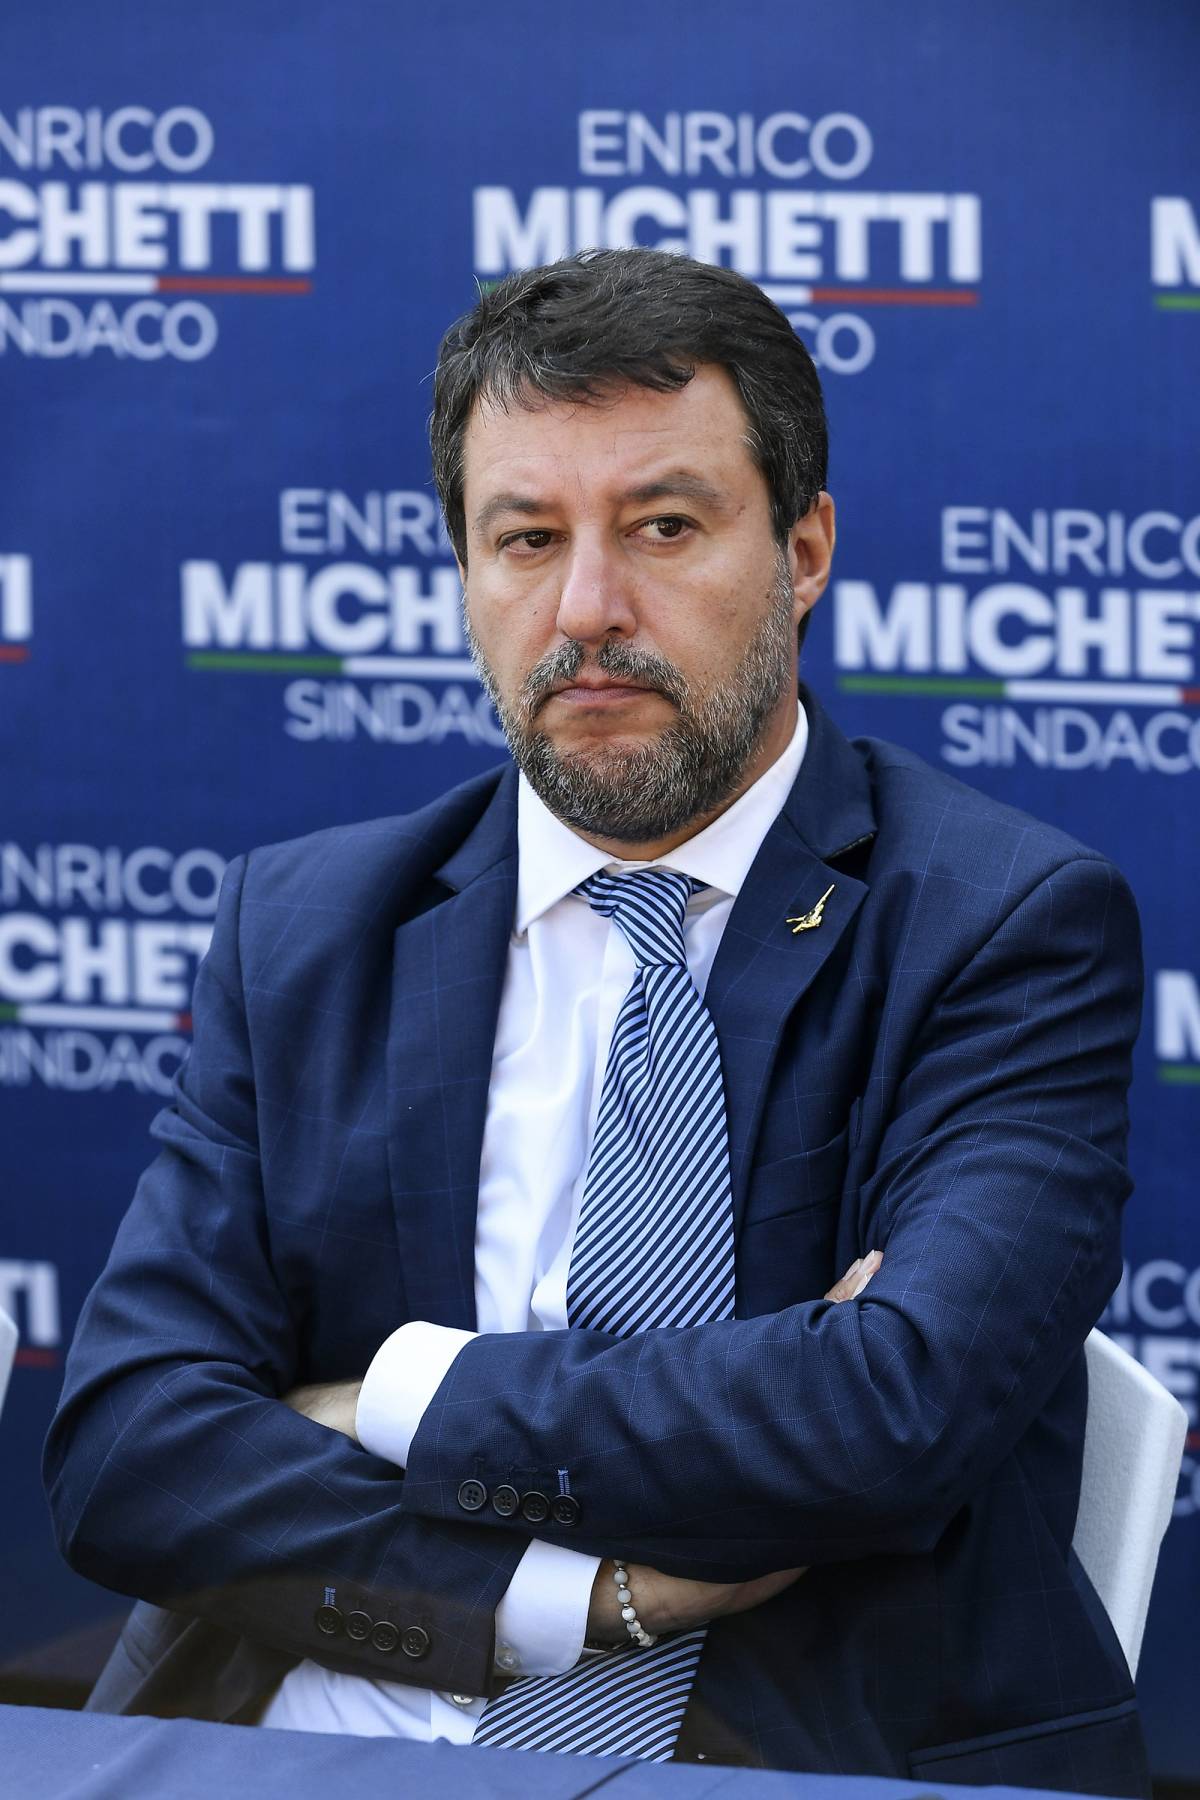 Il mea culpa di Salvini: "Candidati scelti tardi..."